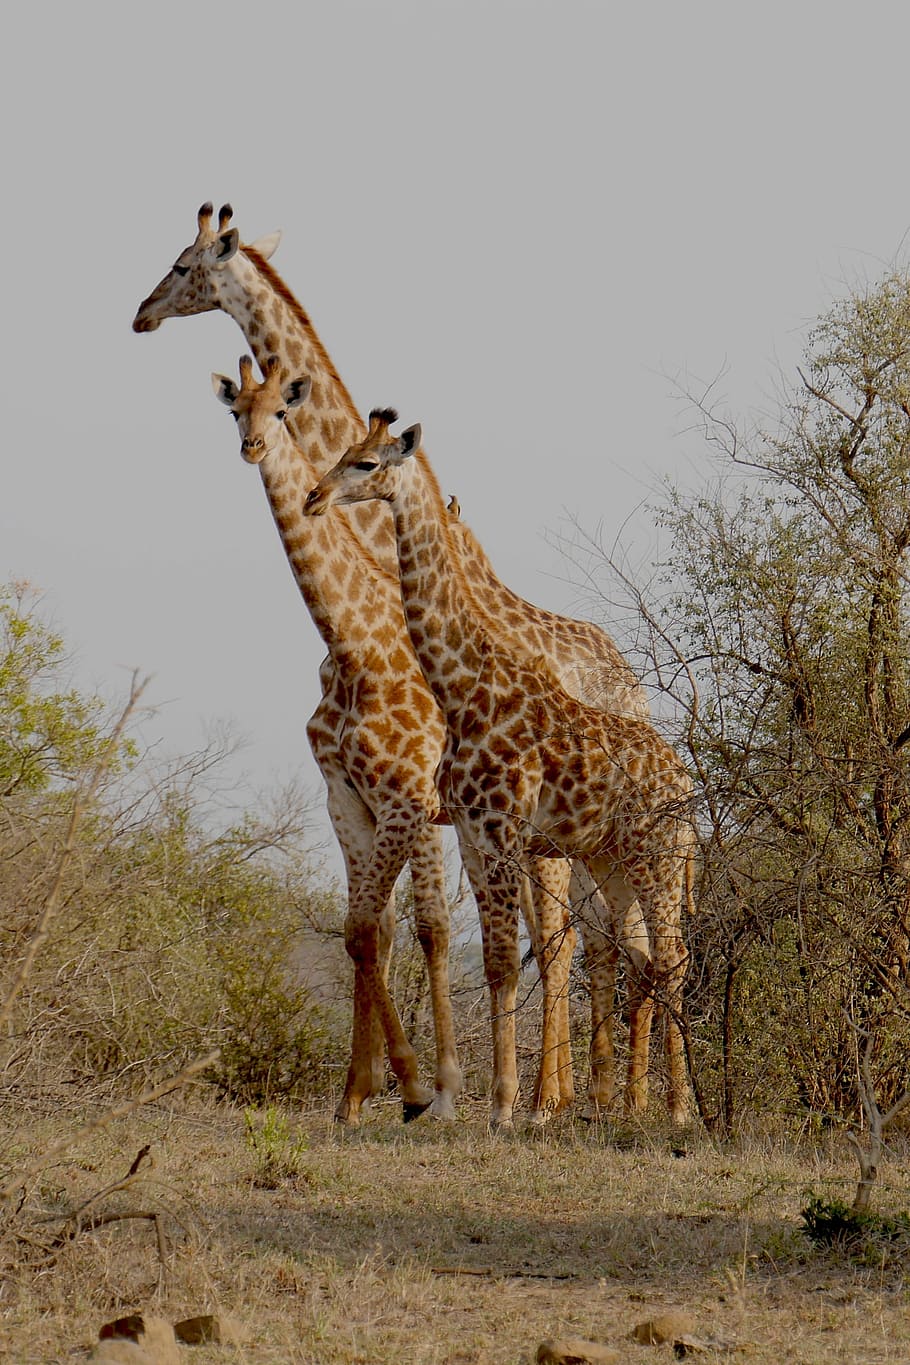 south africa, hluhluwe, giraffe, animals, national park, wild animal, africa, safari Animals, wildlife, nature